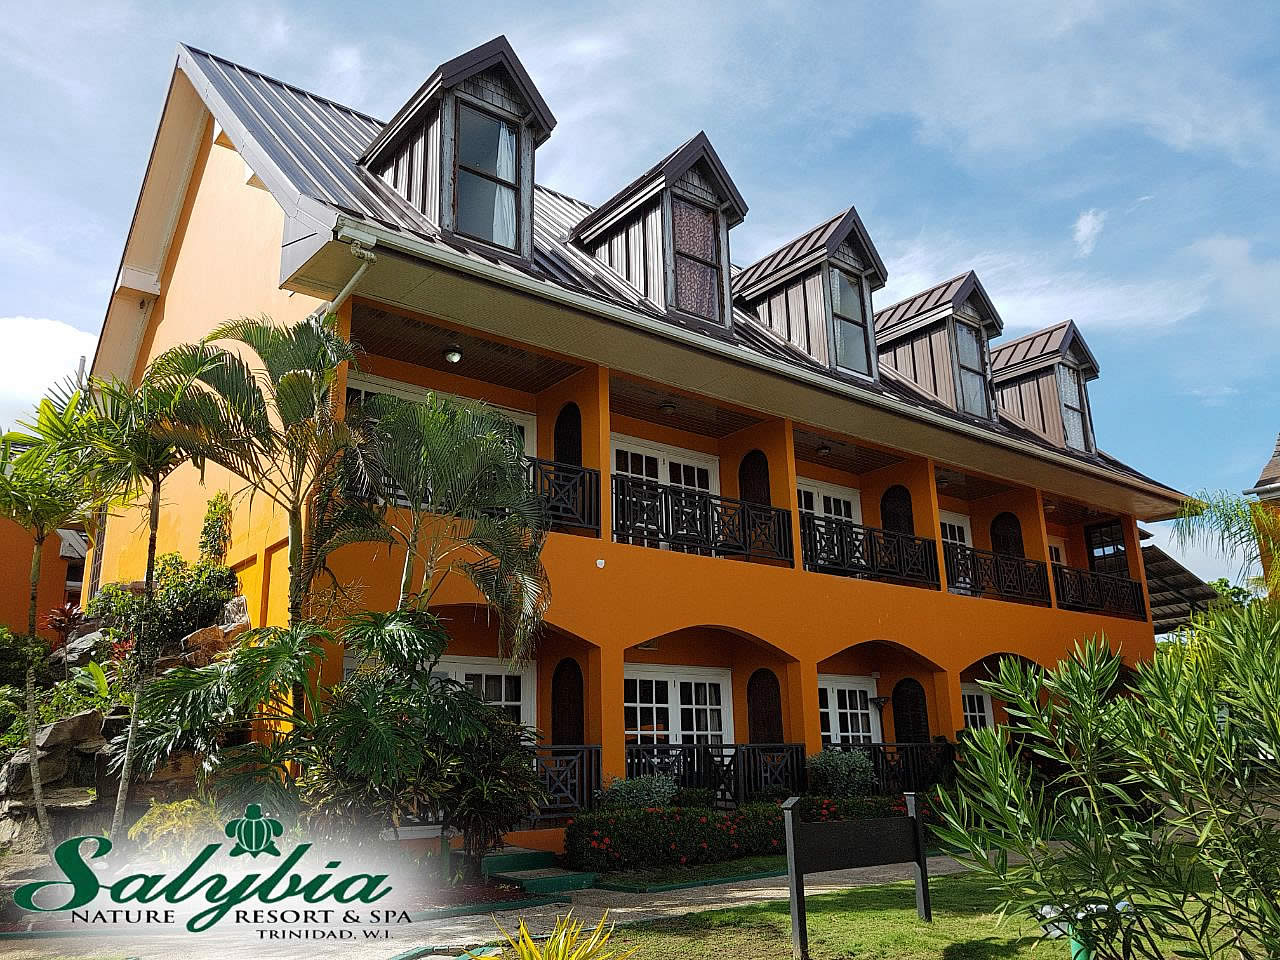 Salybia Nature Resort And Spa Destination Trinidad And Tobago Tours